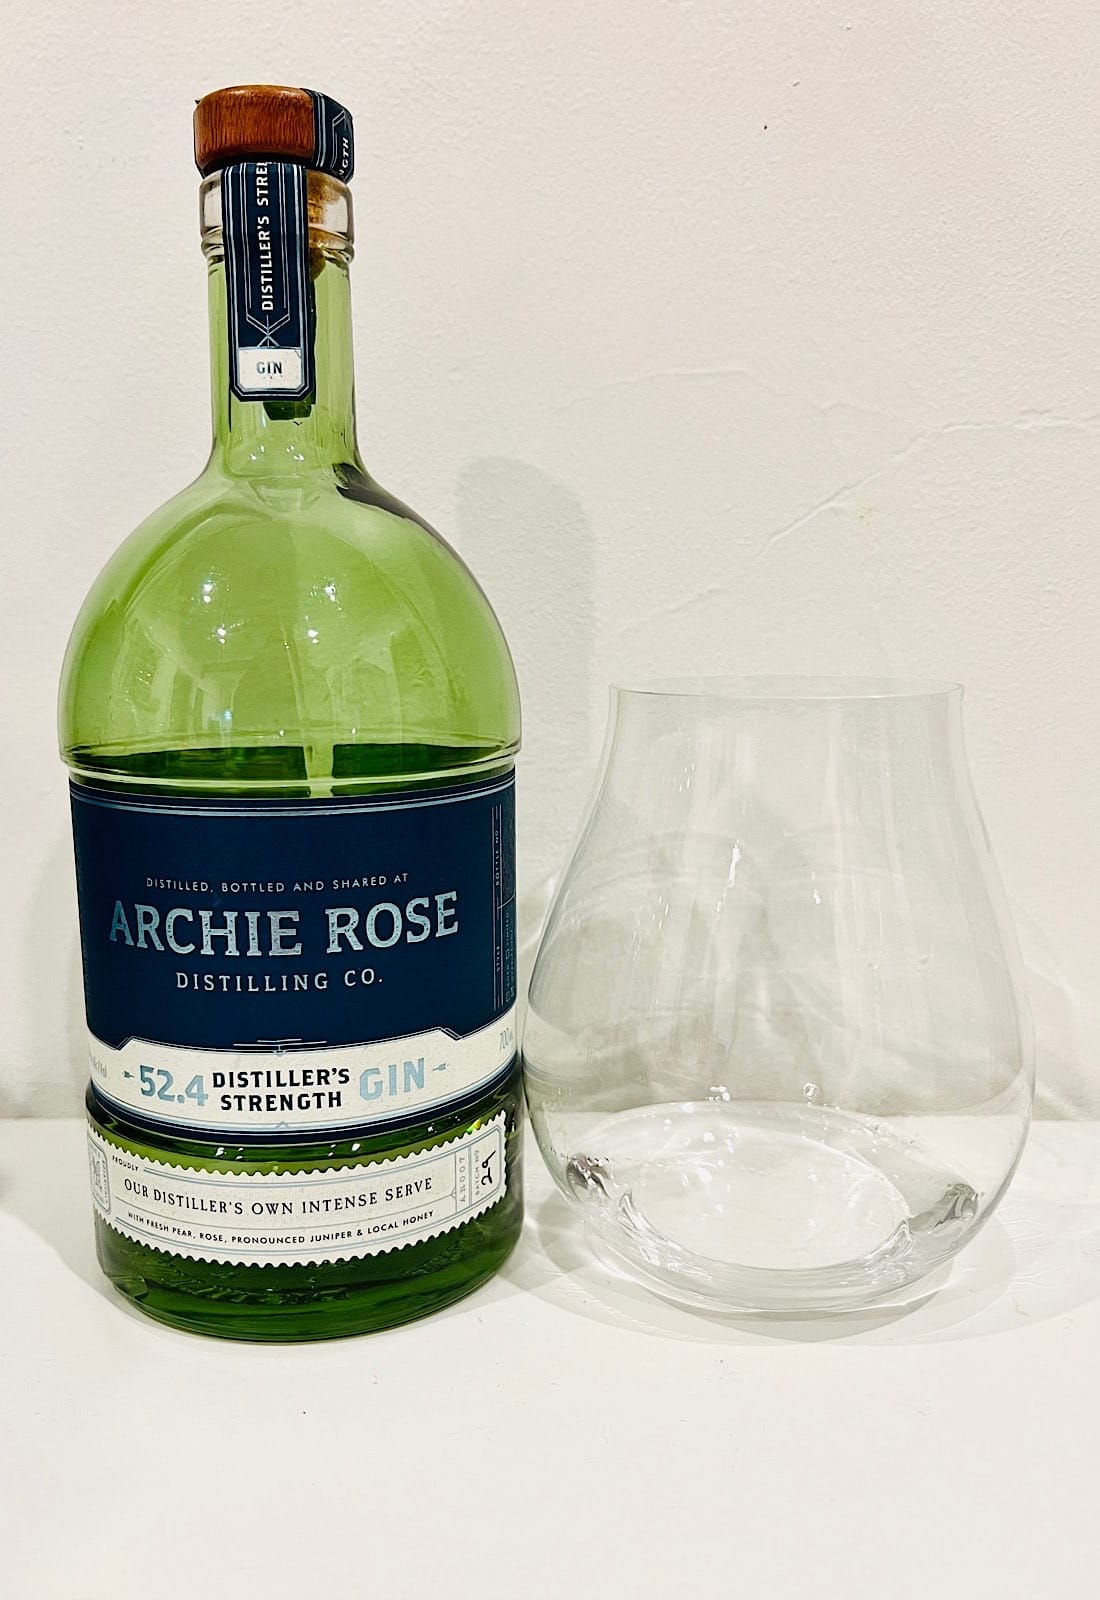 Archie Rose Distiller's Strength gin reviewed